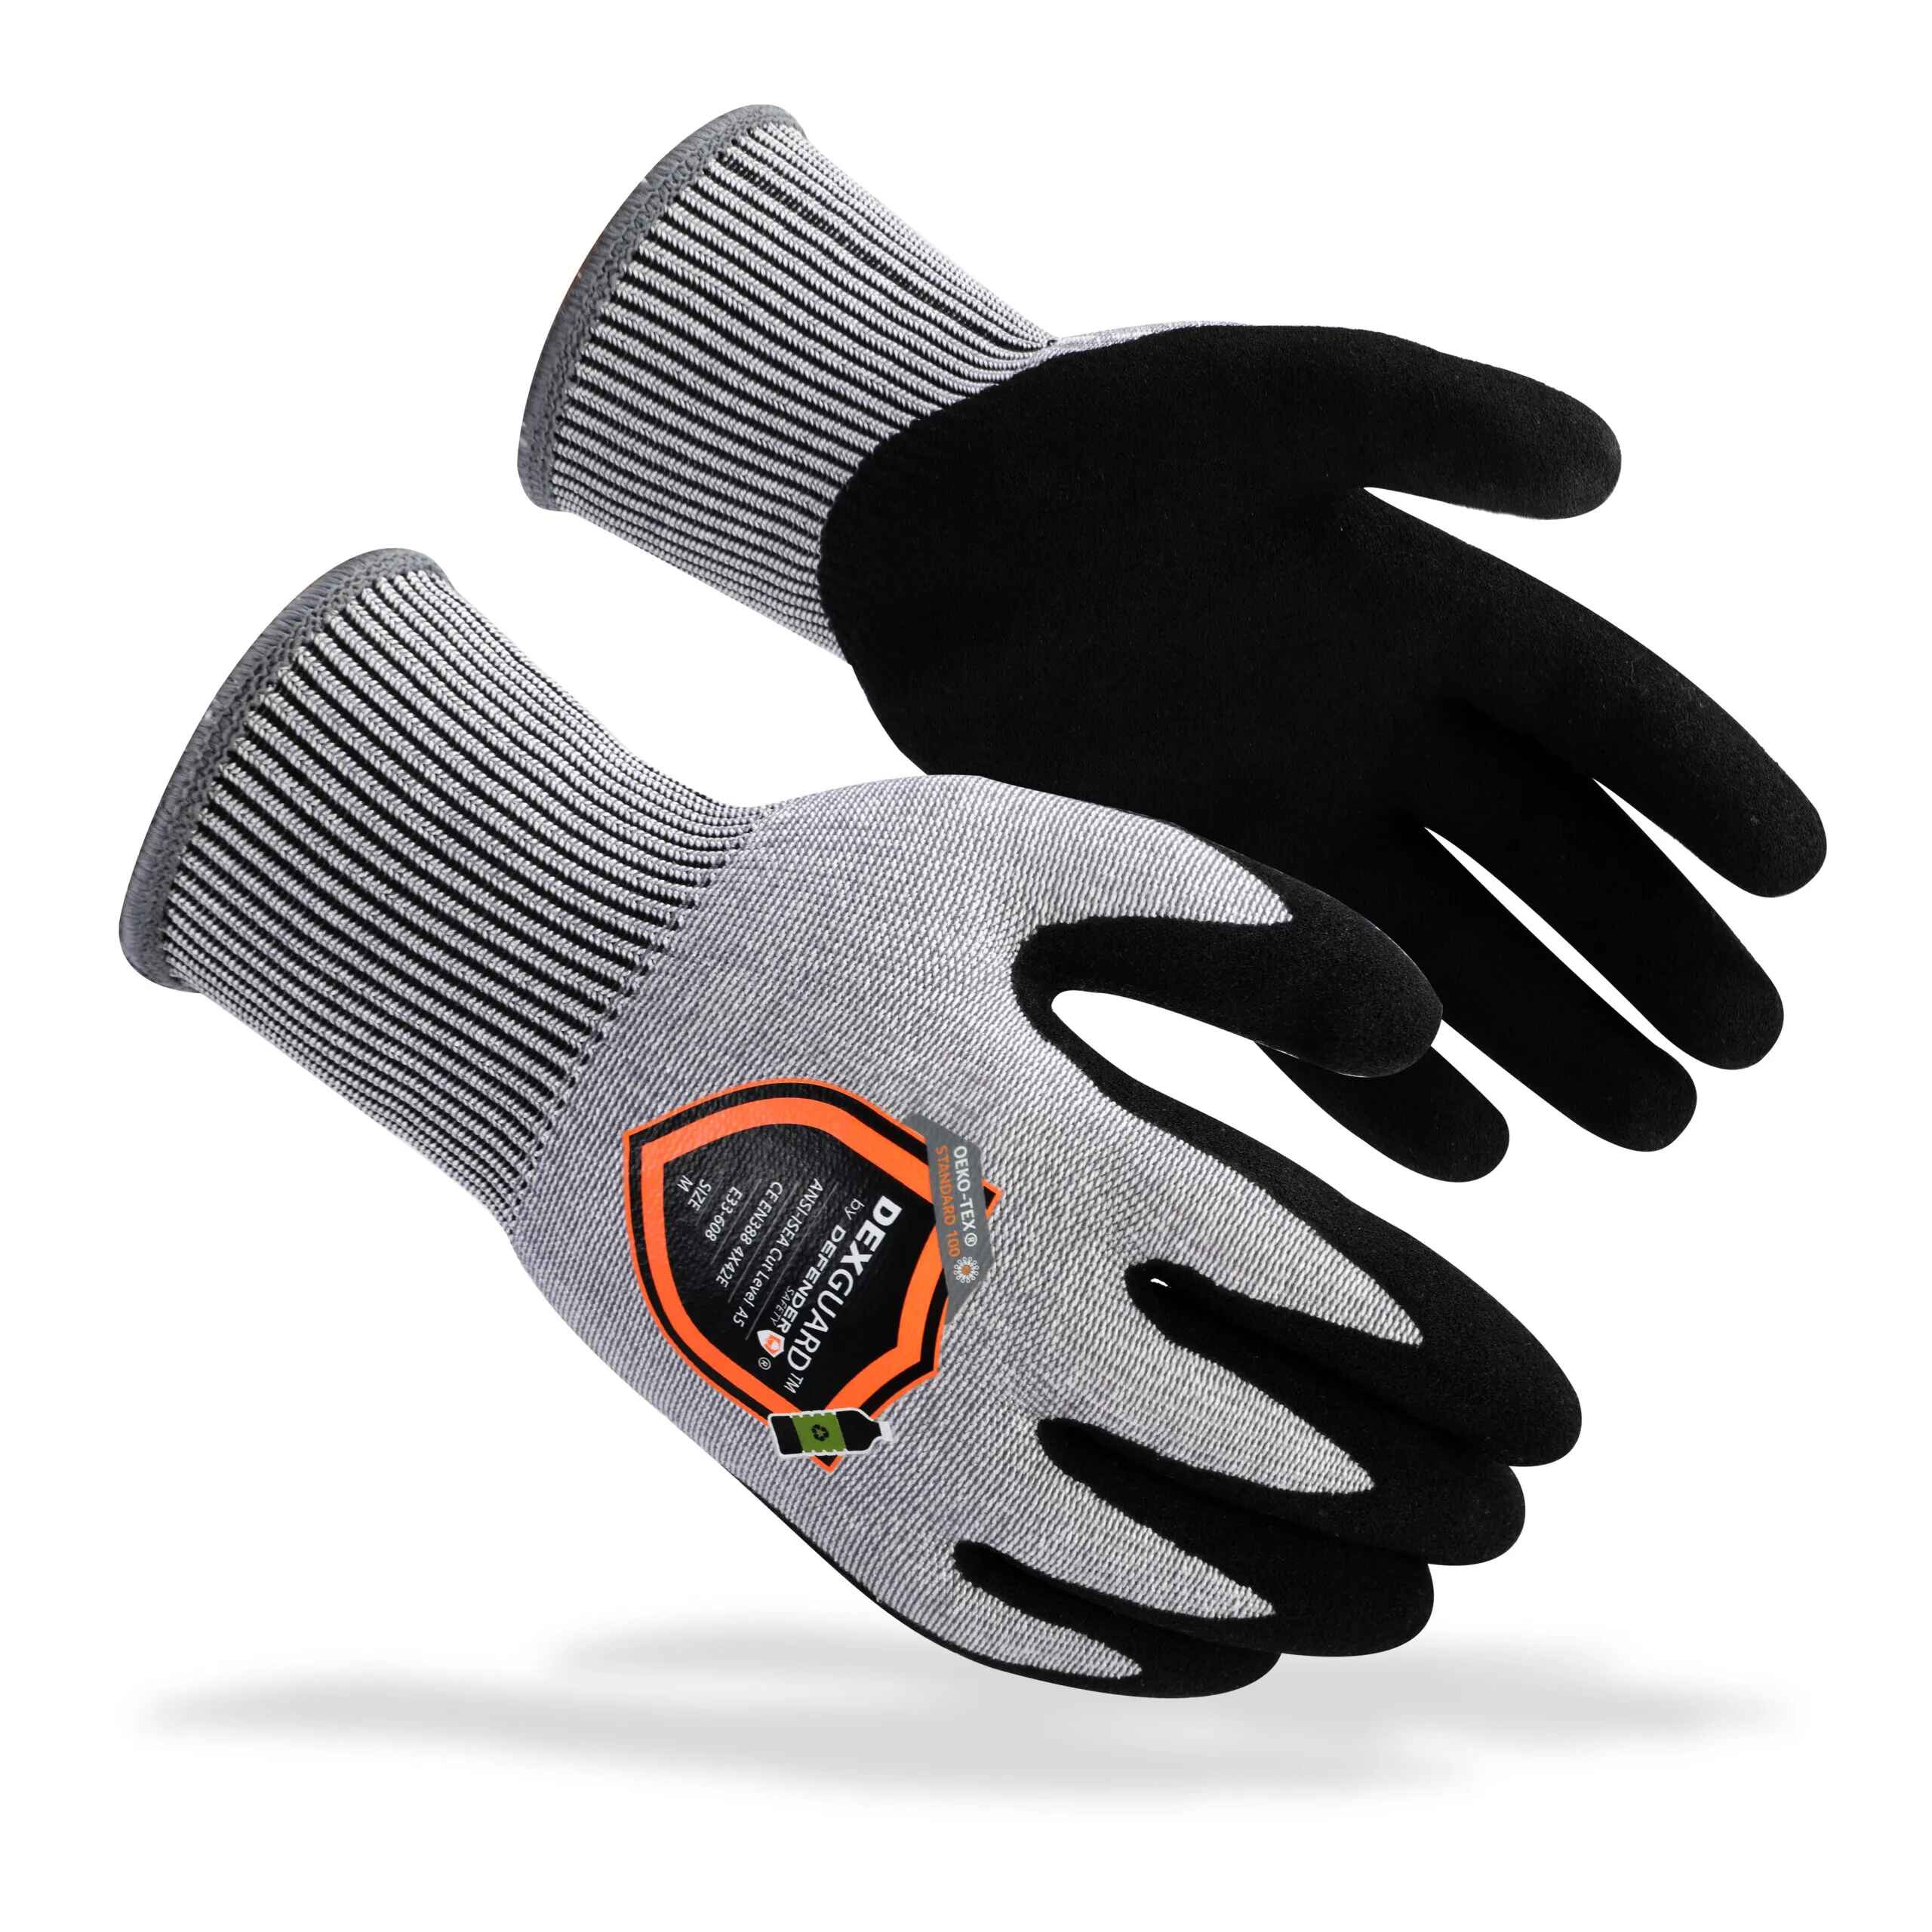 Mechanix Wear - Cut & Abrasion-Resistant Gloves: Size 2XL, ANSI